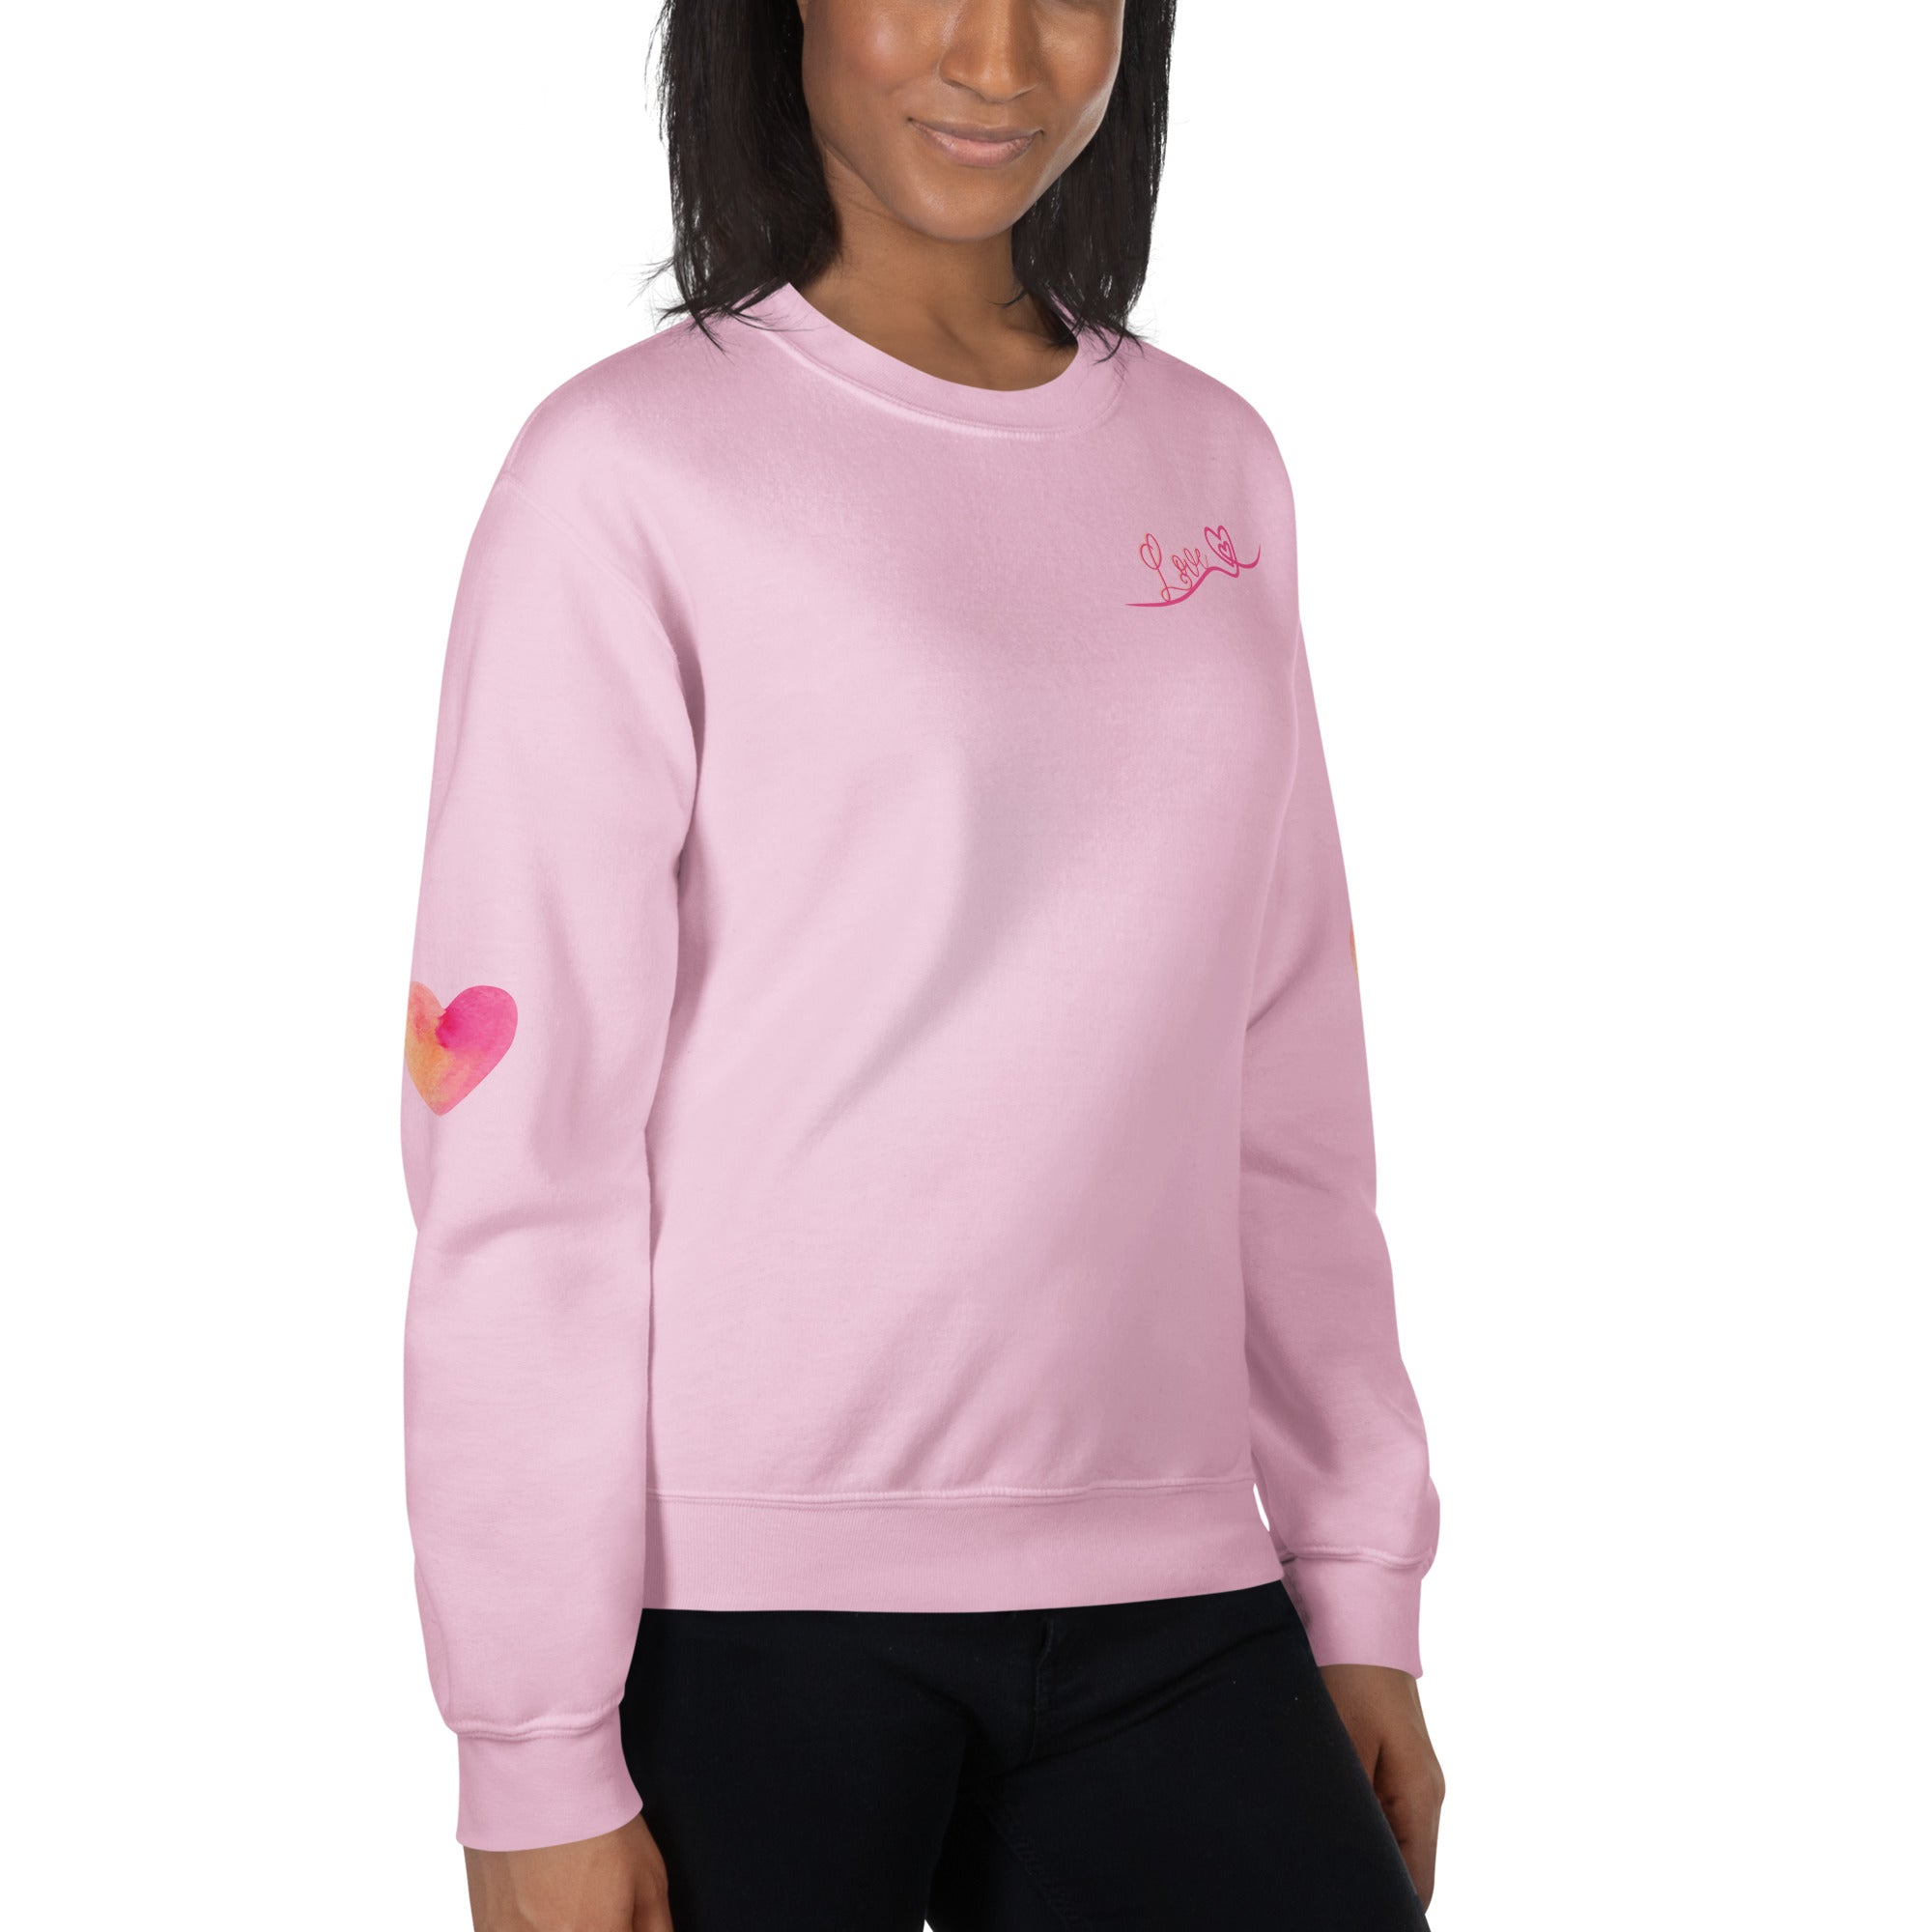 Love Hearts Unisex Sweatshirt